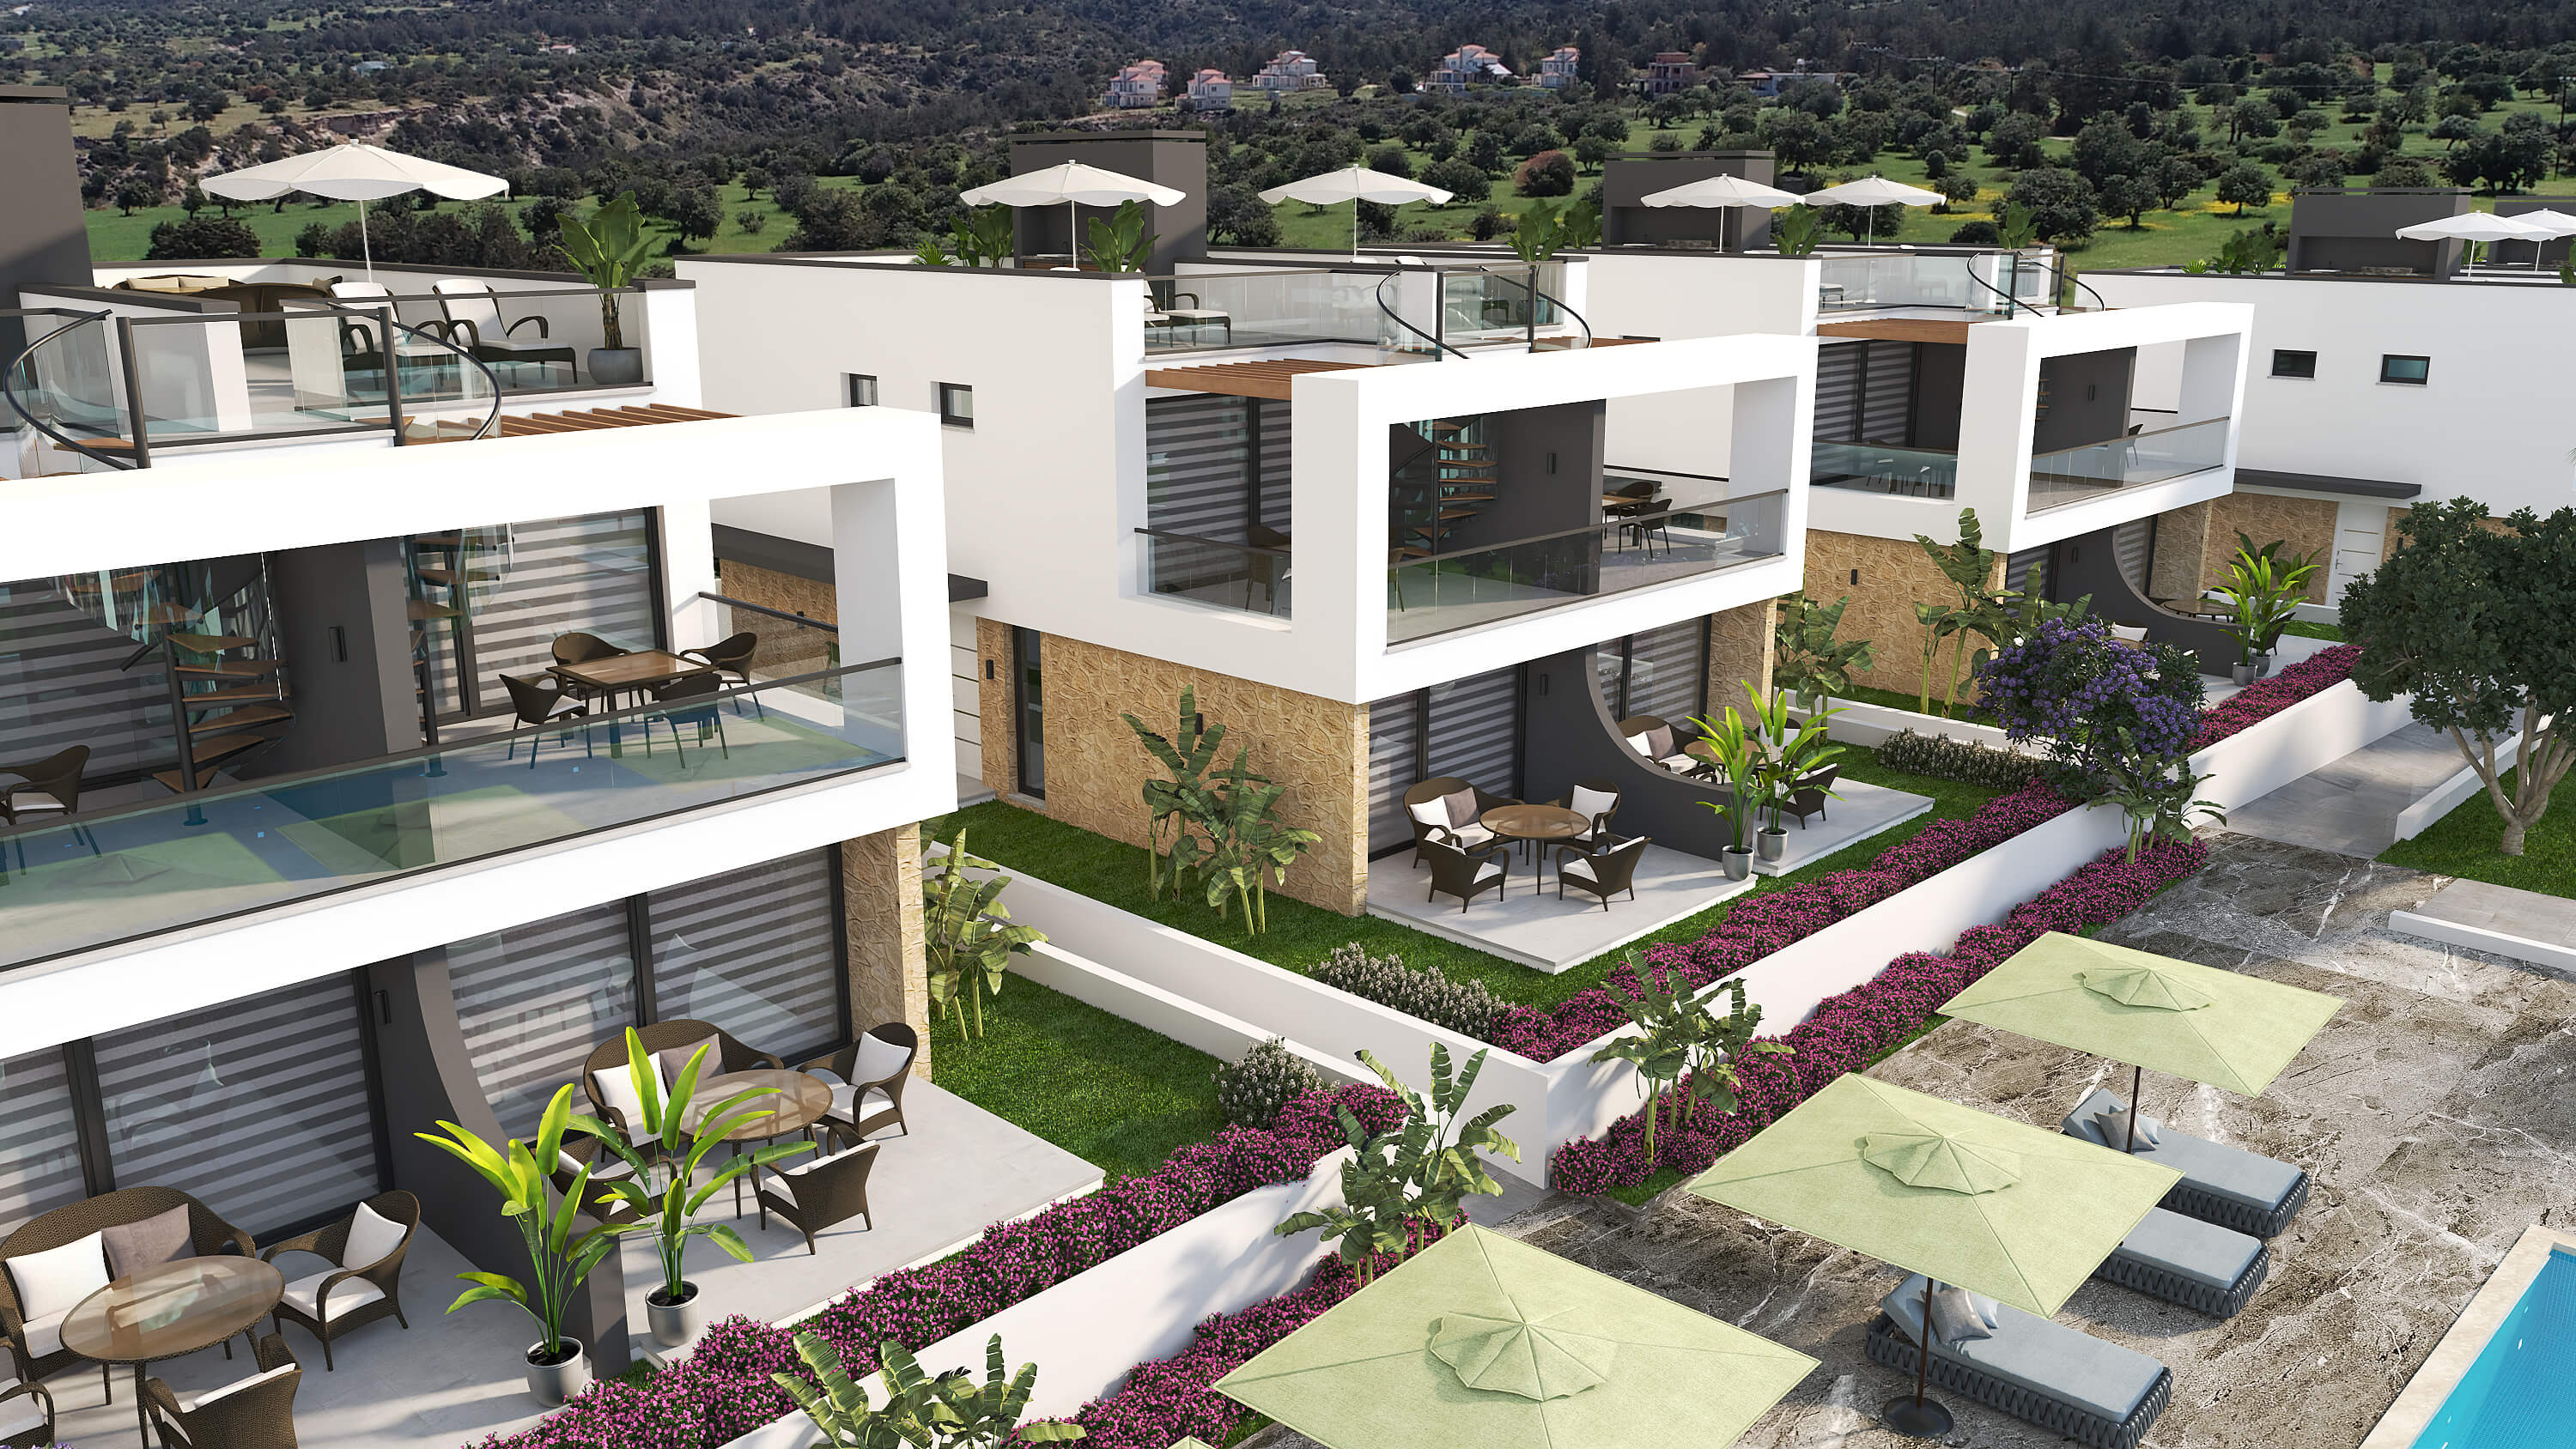 2 bedrooms apartment in semi detached villa in new project